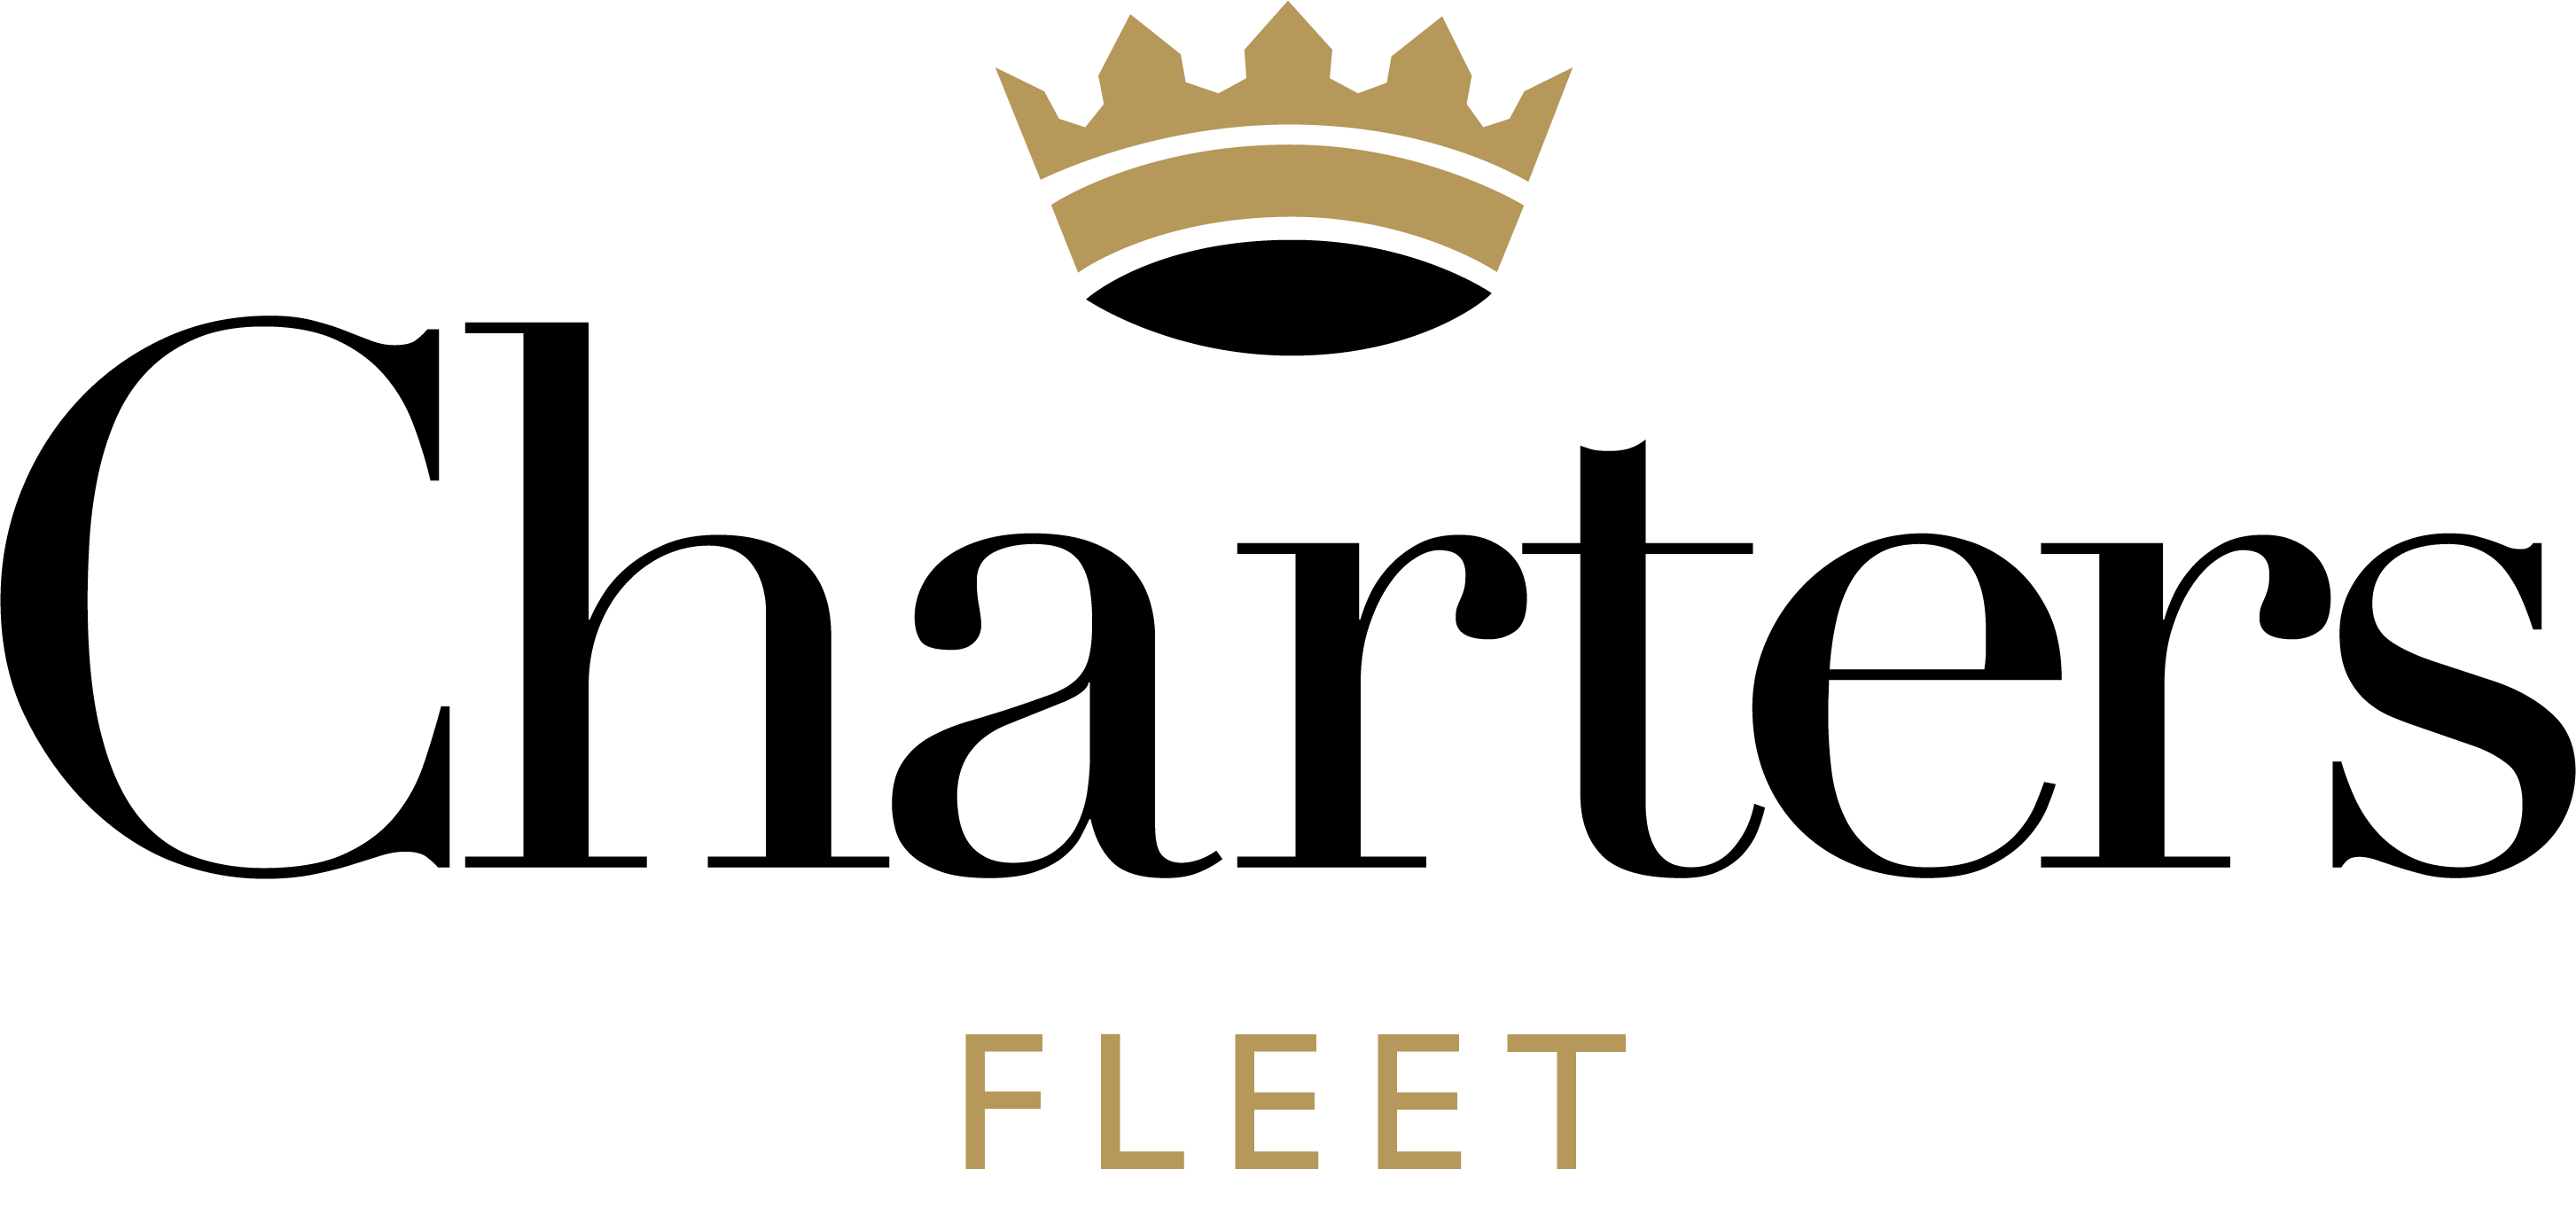 charters_new_Fleet_logo_black.png